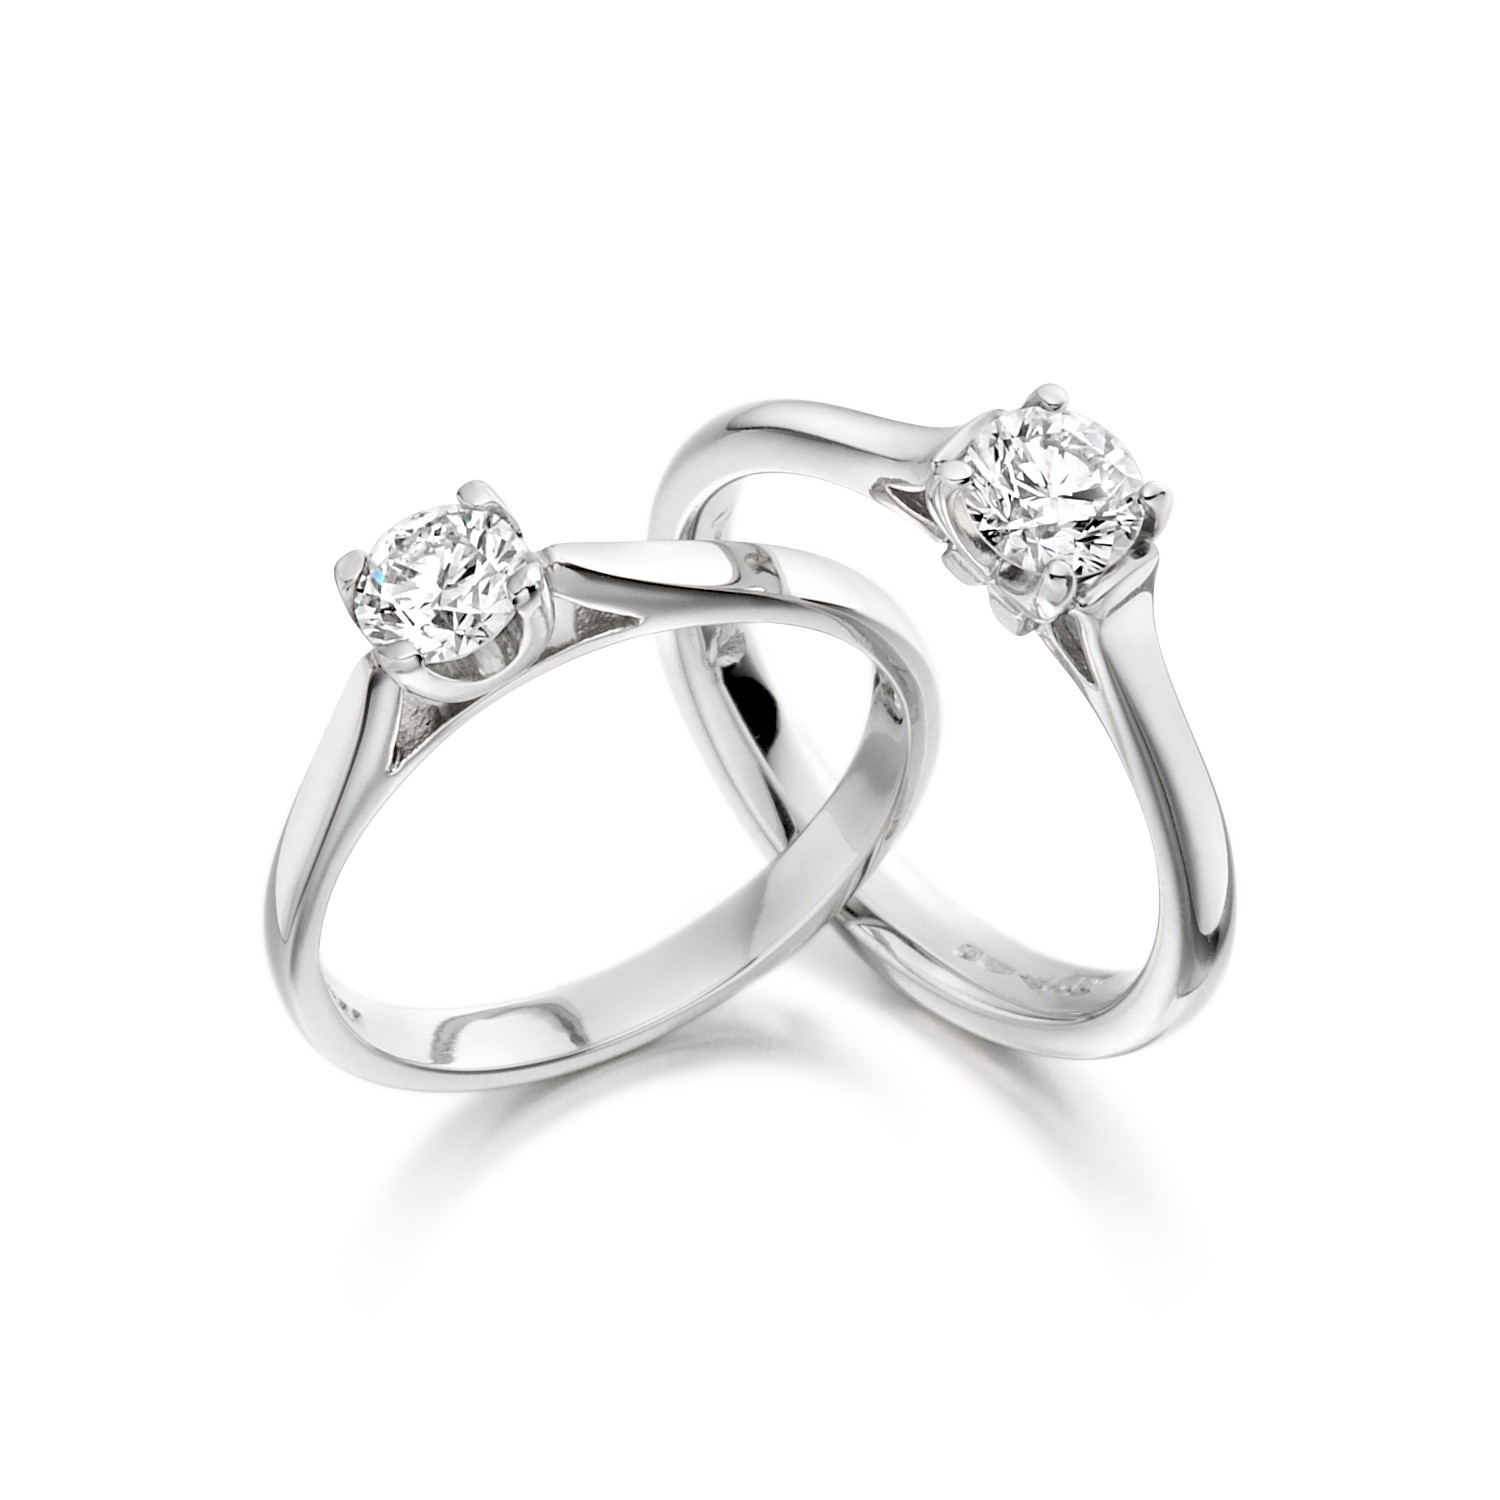 Solitaire diamond rings